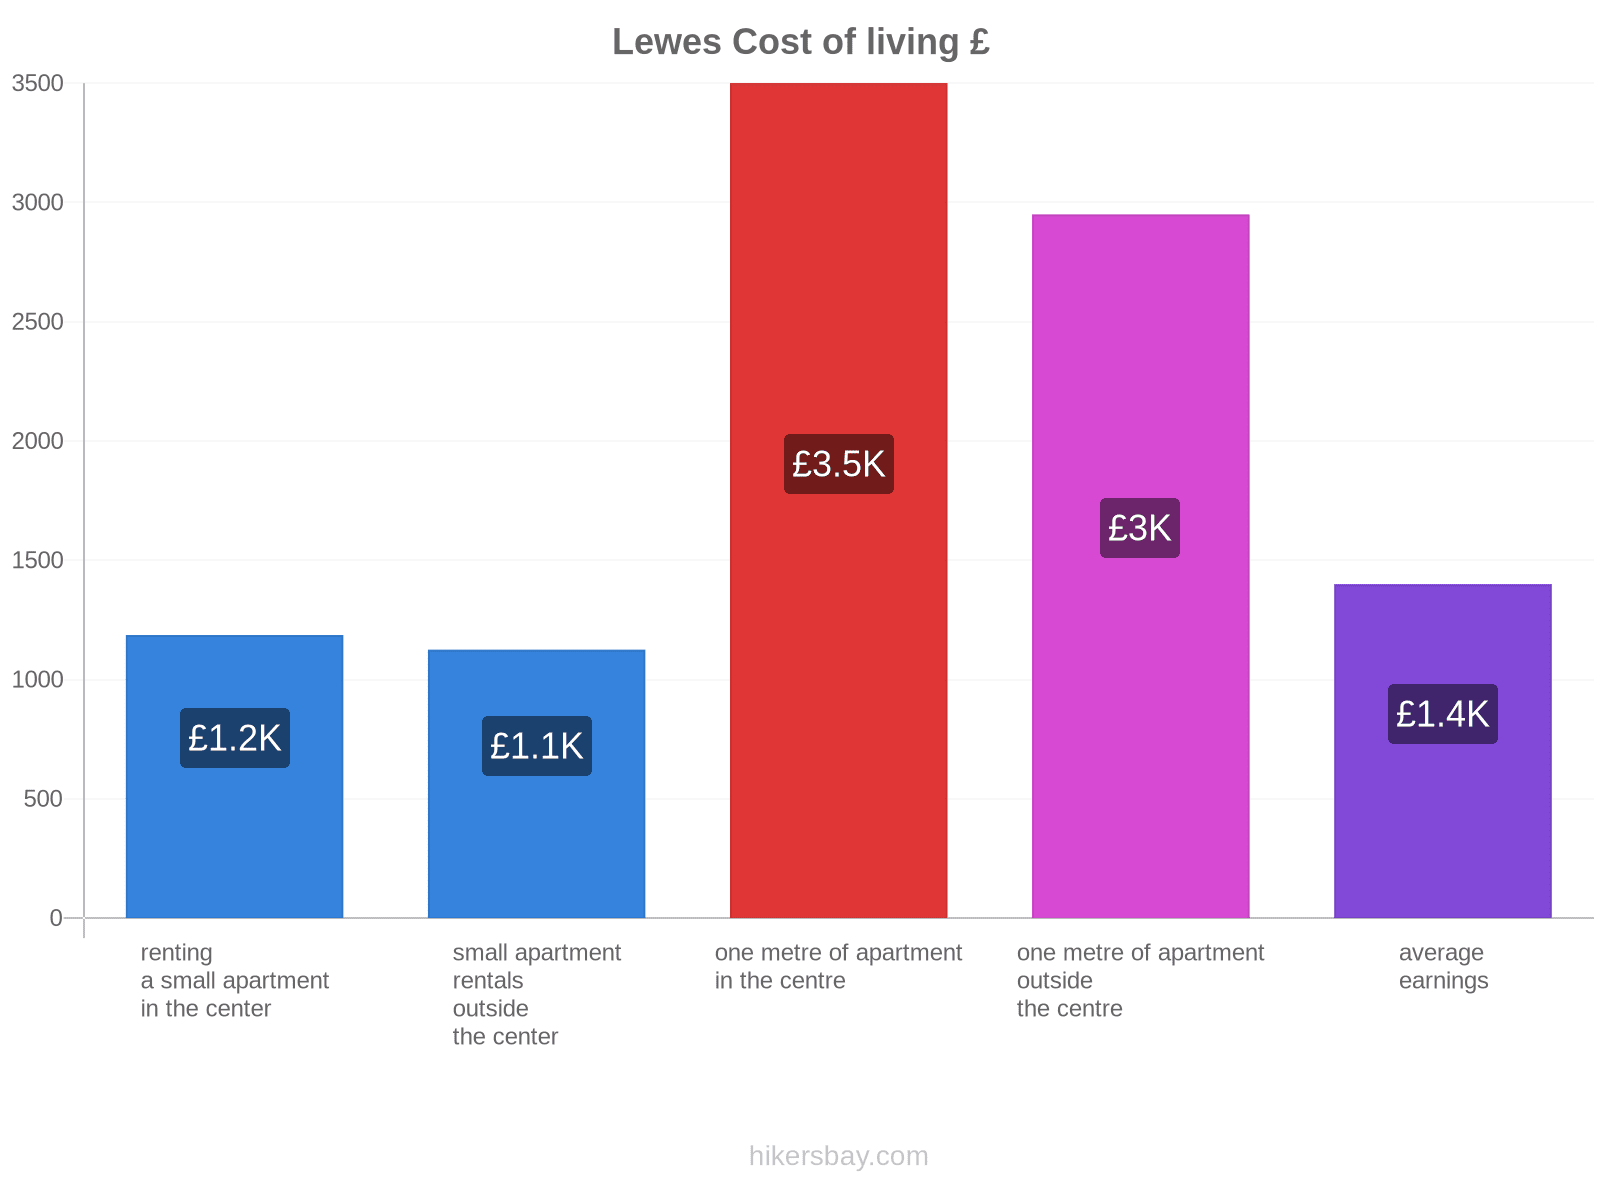 Lewes cost of living hikersbay.com